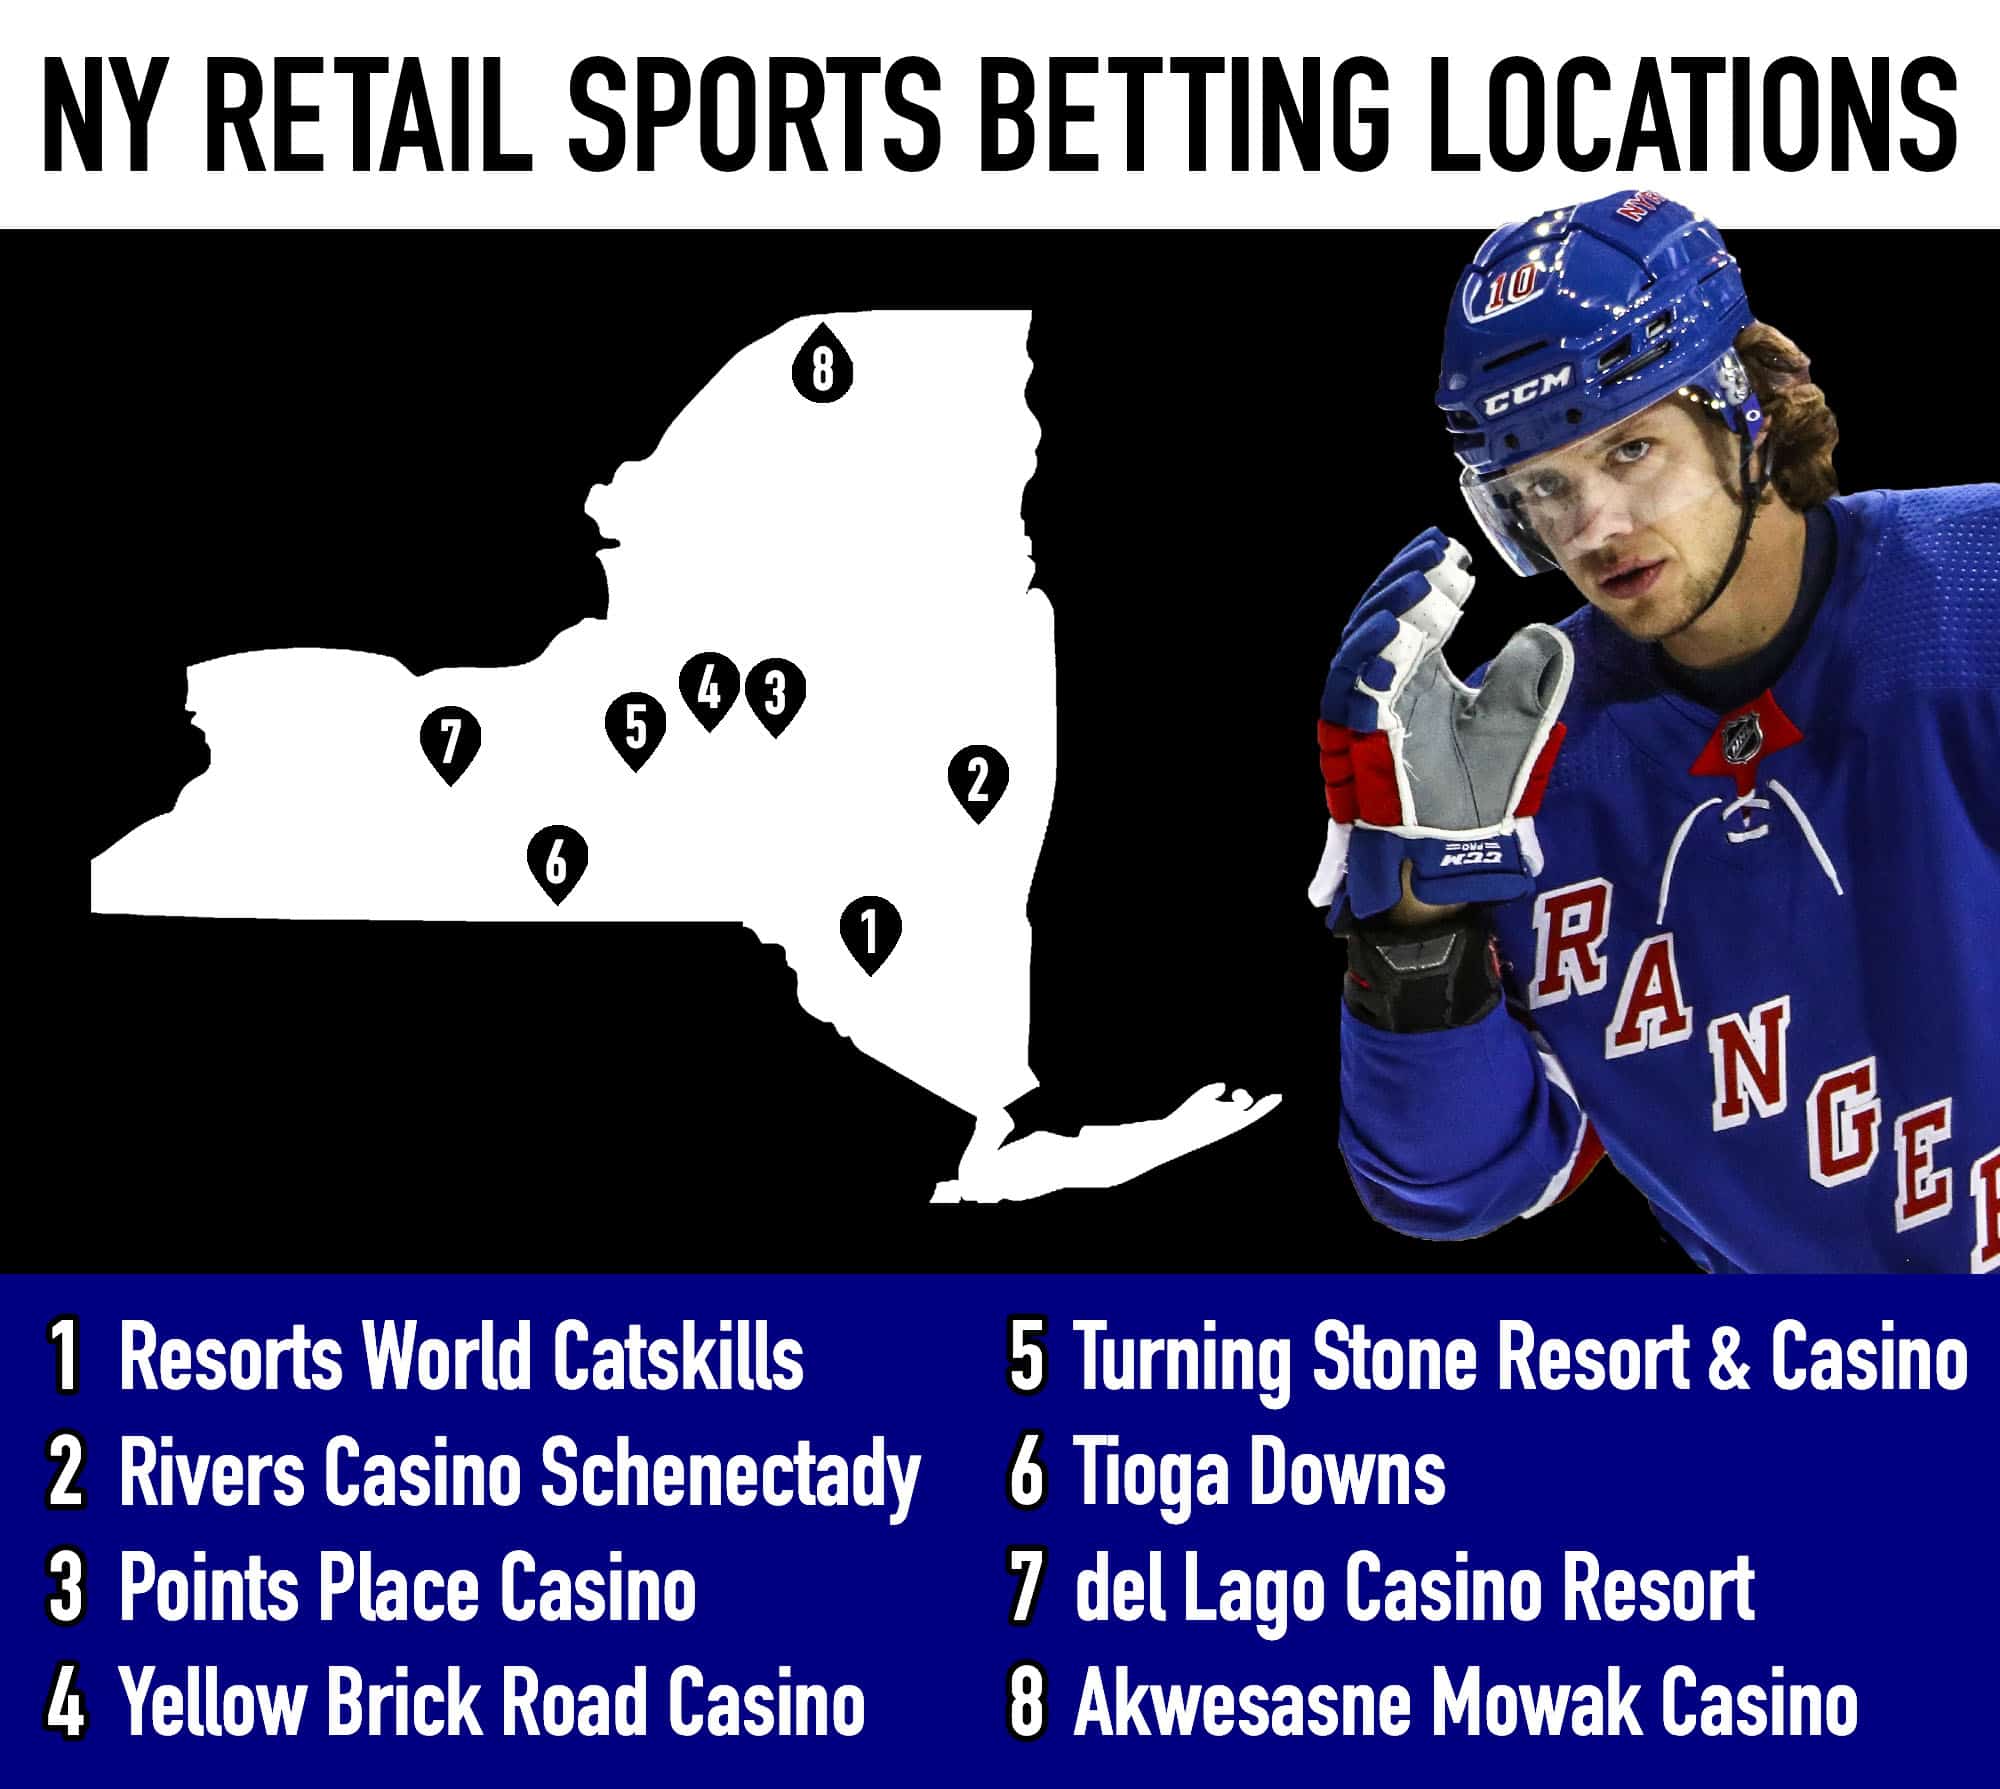 NY Online Sports Betting, Retail Locations, Artemi Panarin, New York Rangers